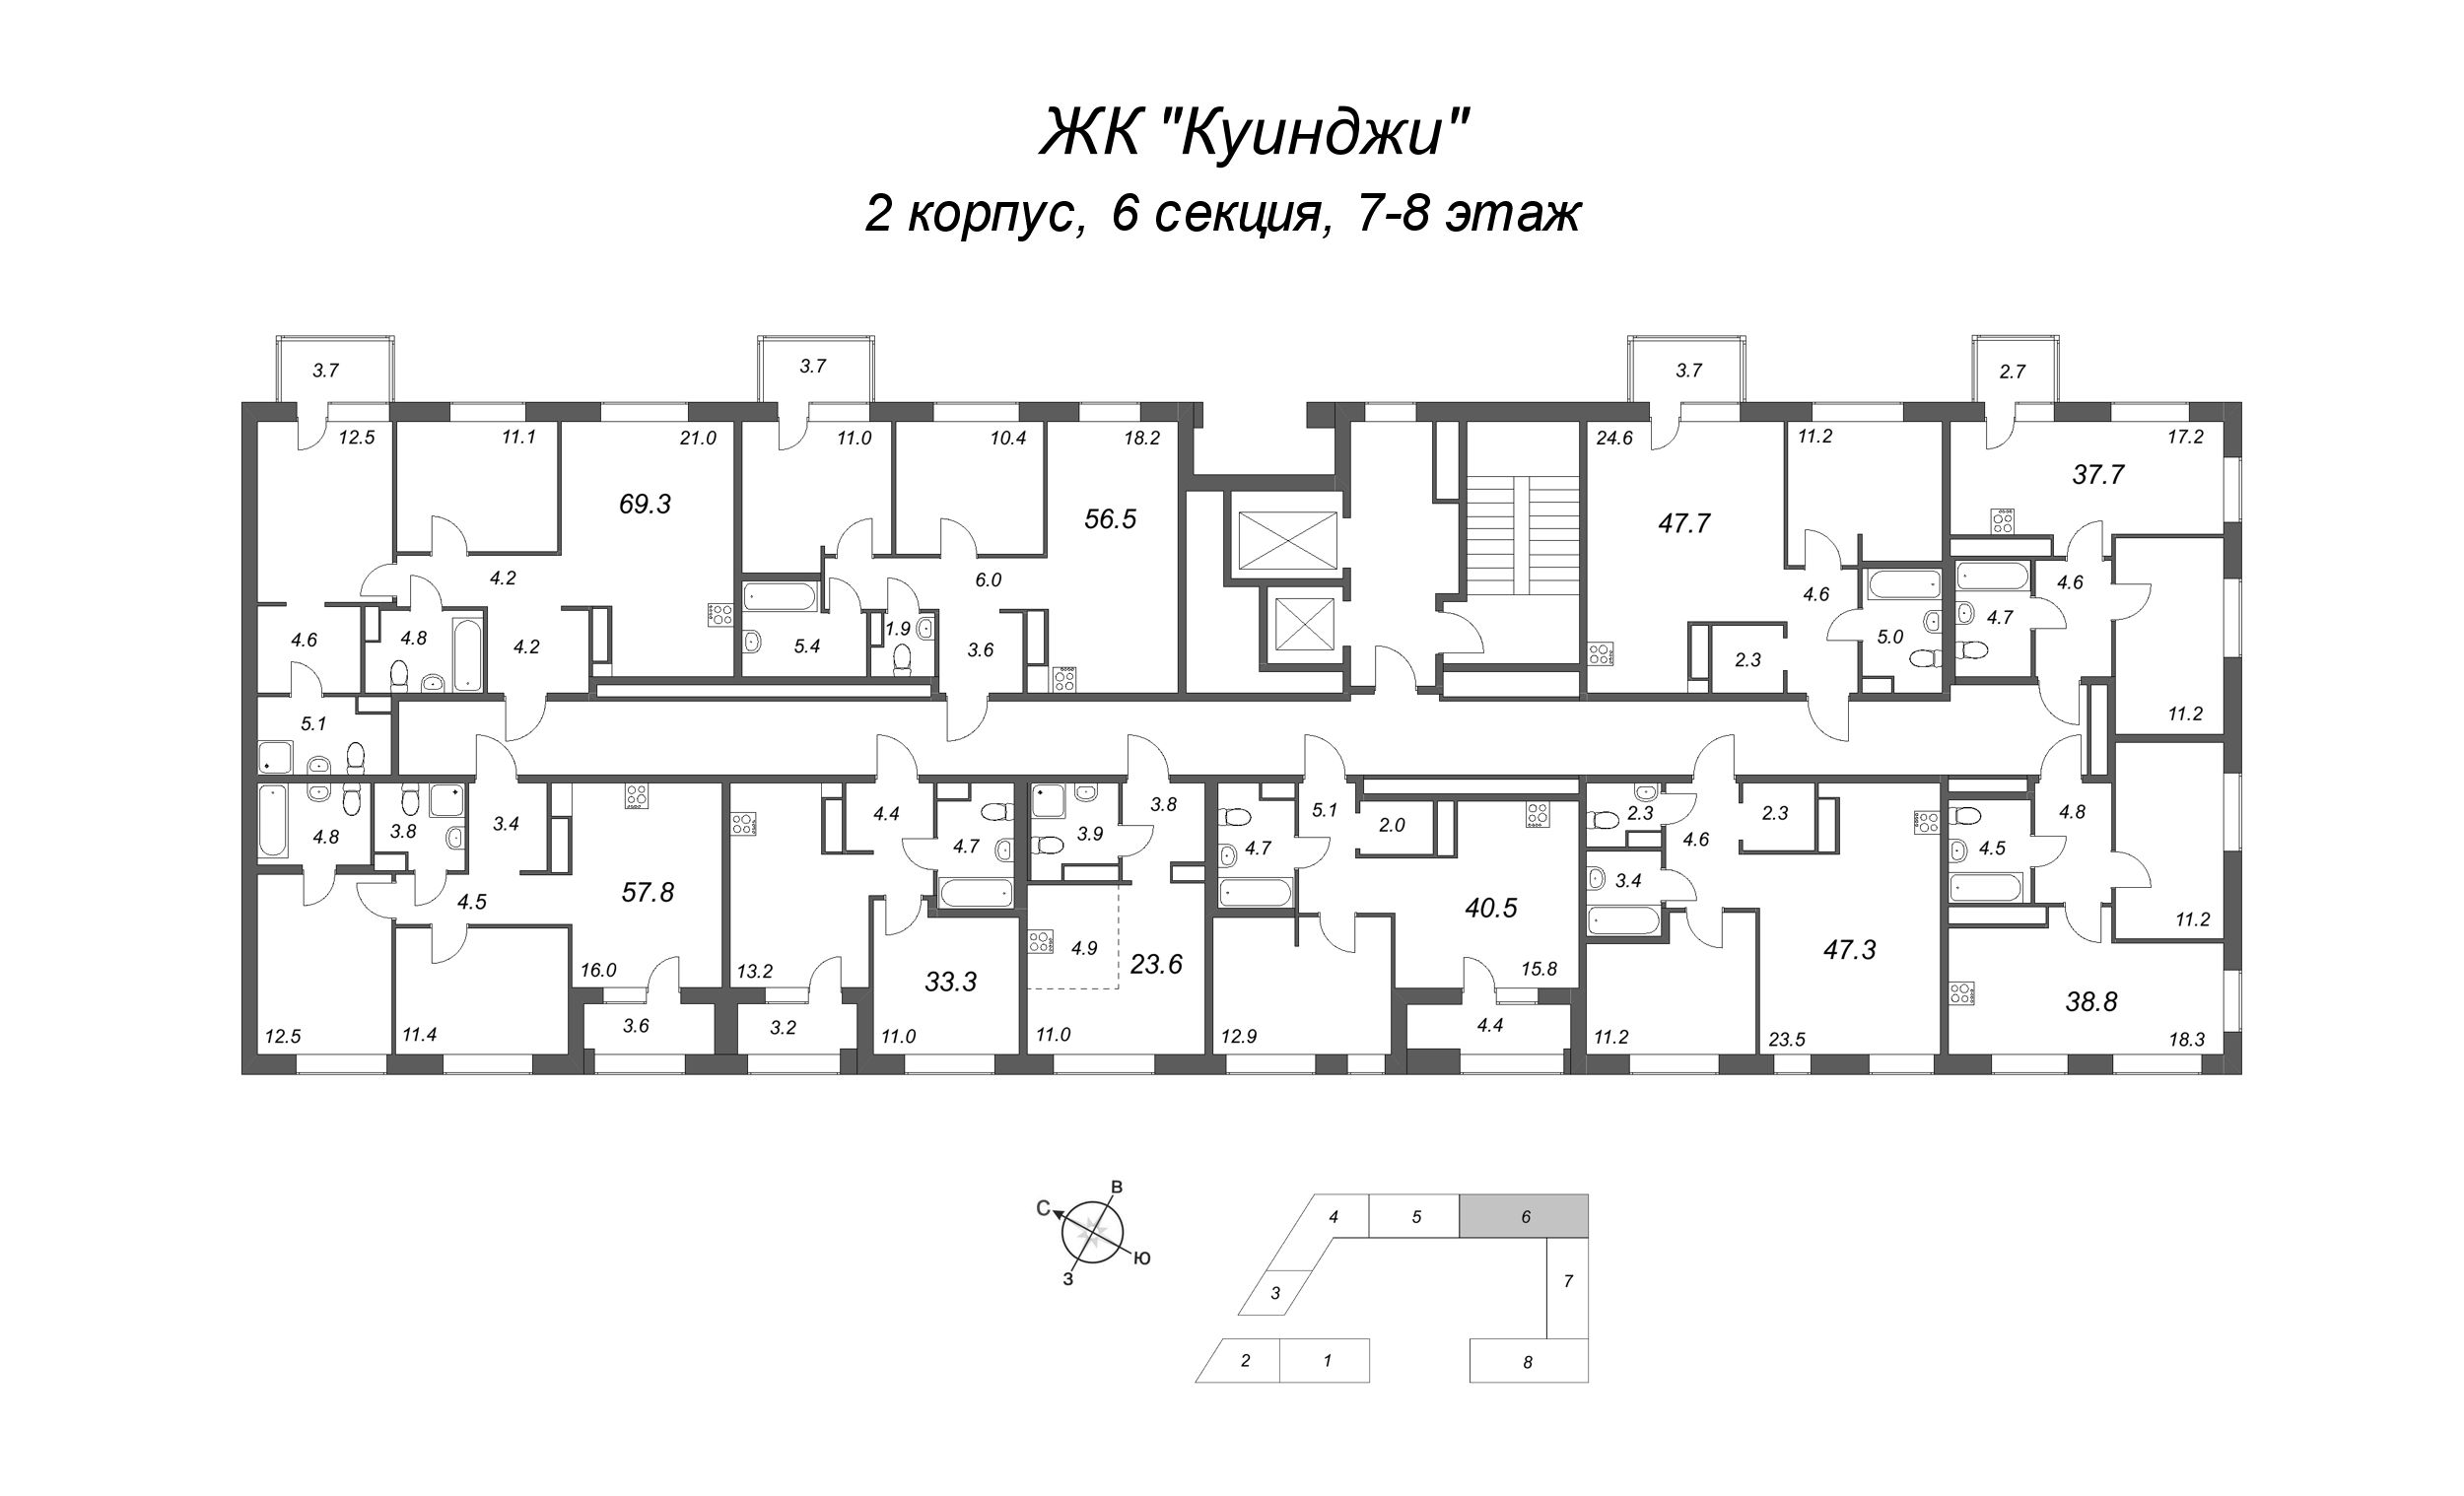 2-комнатная (Евро) квартира, 37.7 м² - планировка этажа